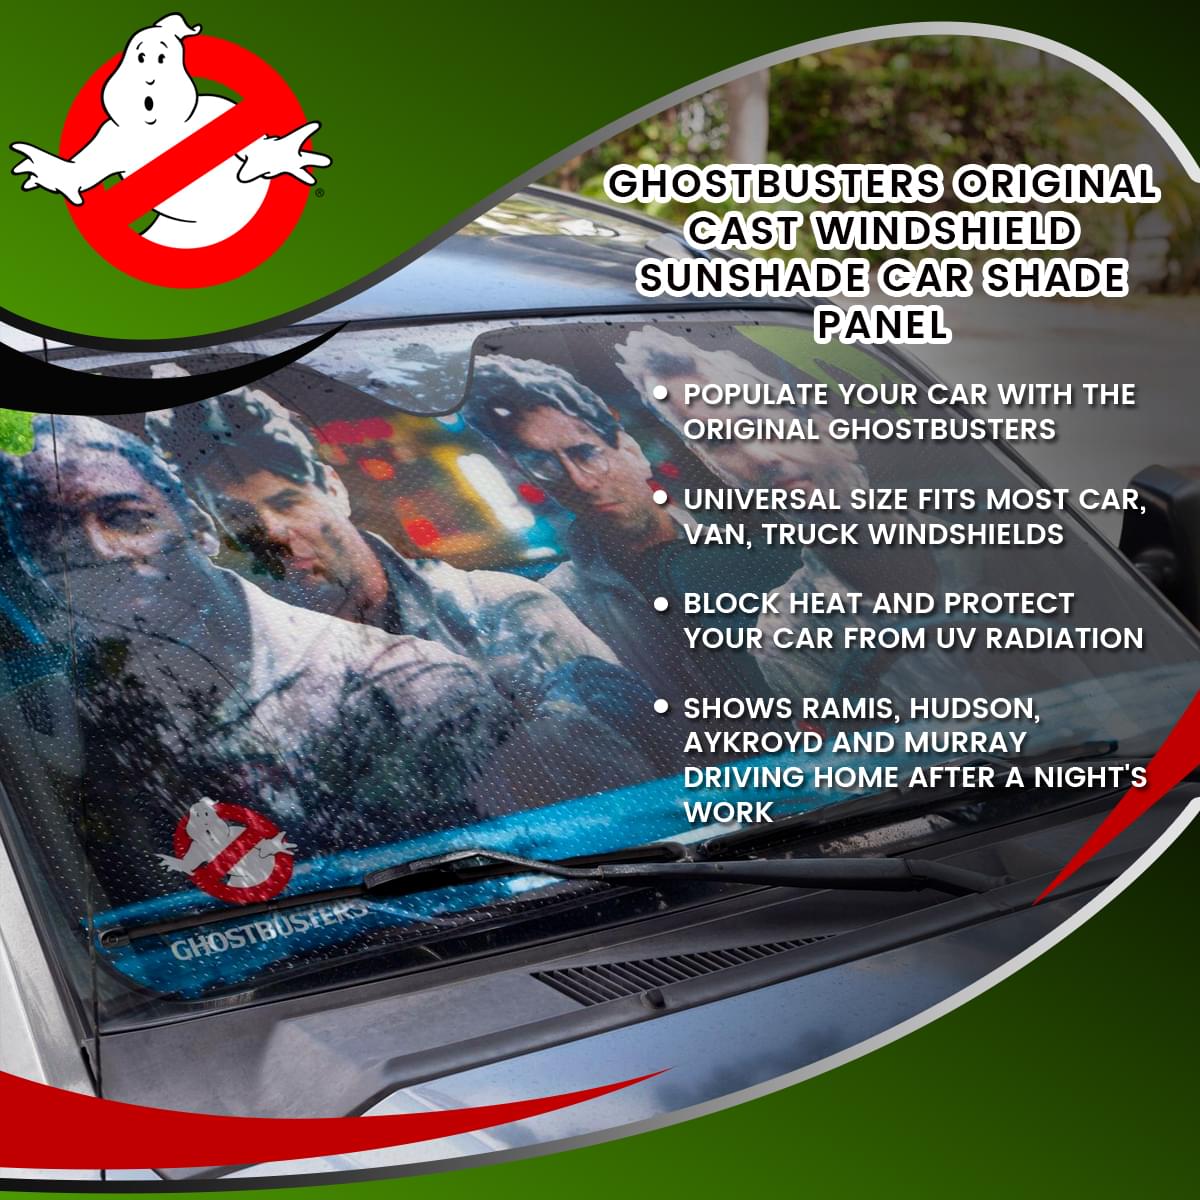 Ghostbusters Original Cast Windshield Sunshade Car Shade Panel